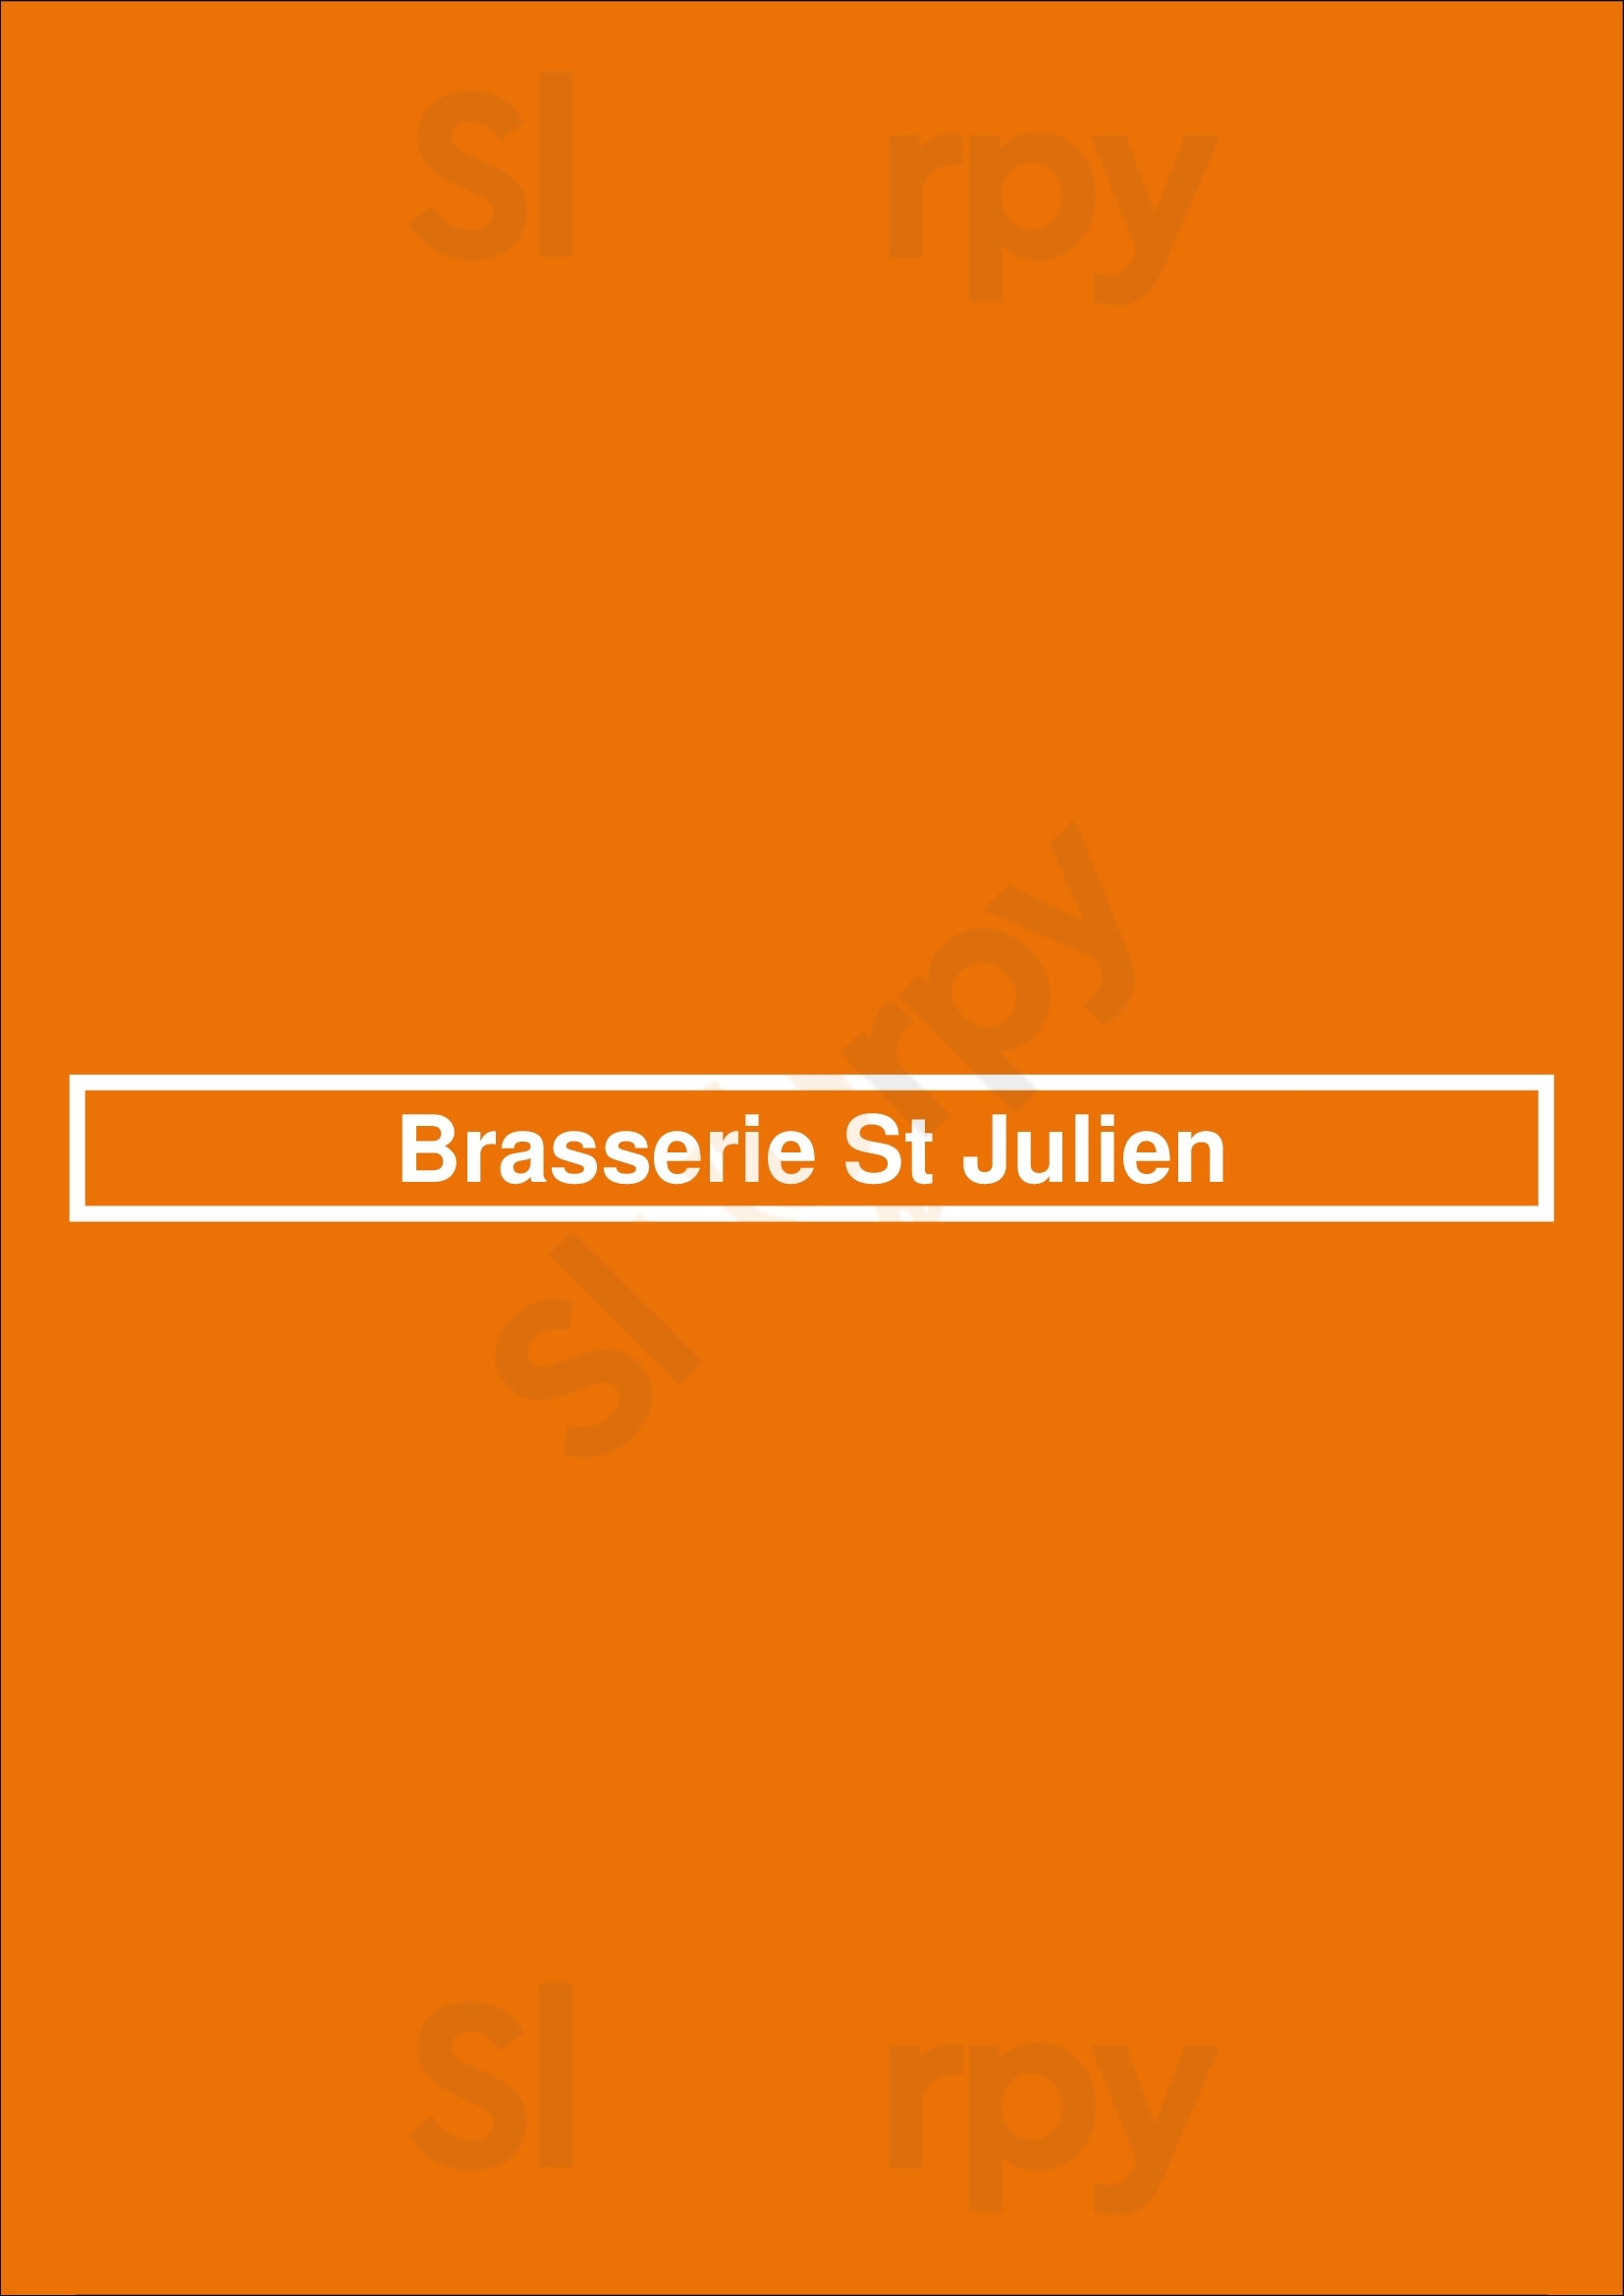 Brasserie St Julien Auderghem Menu - 1